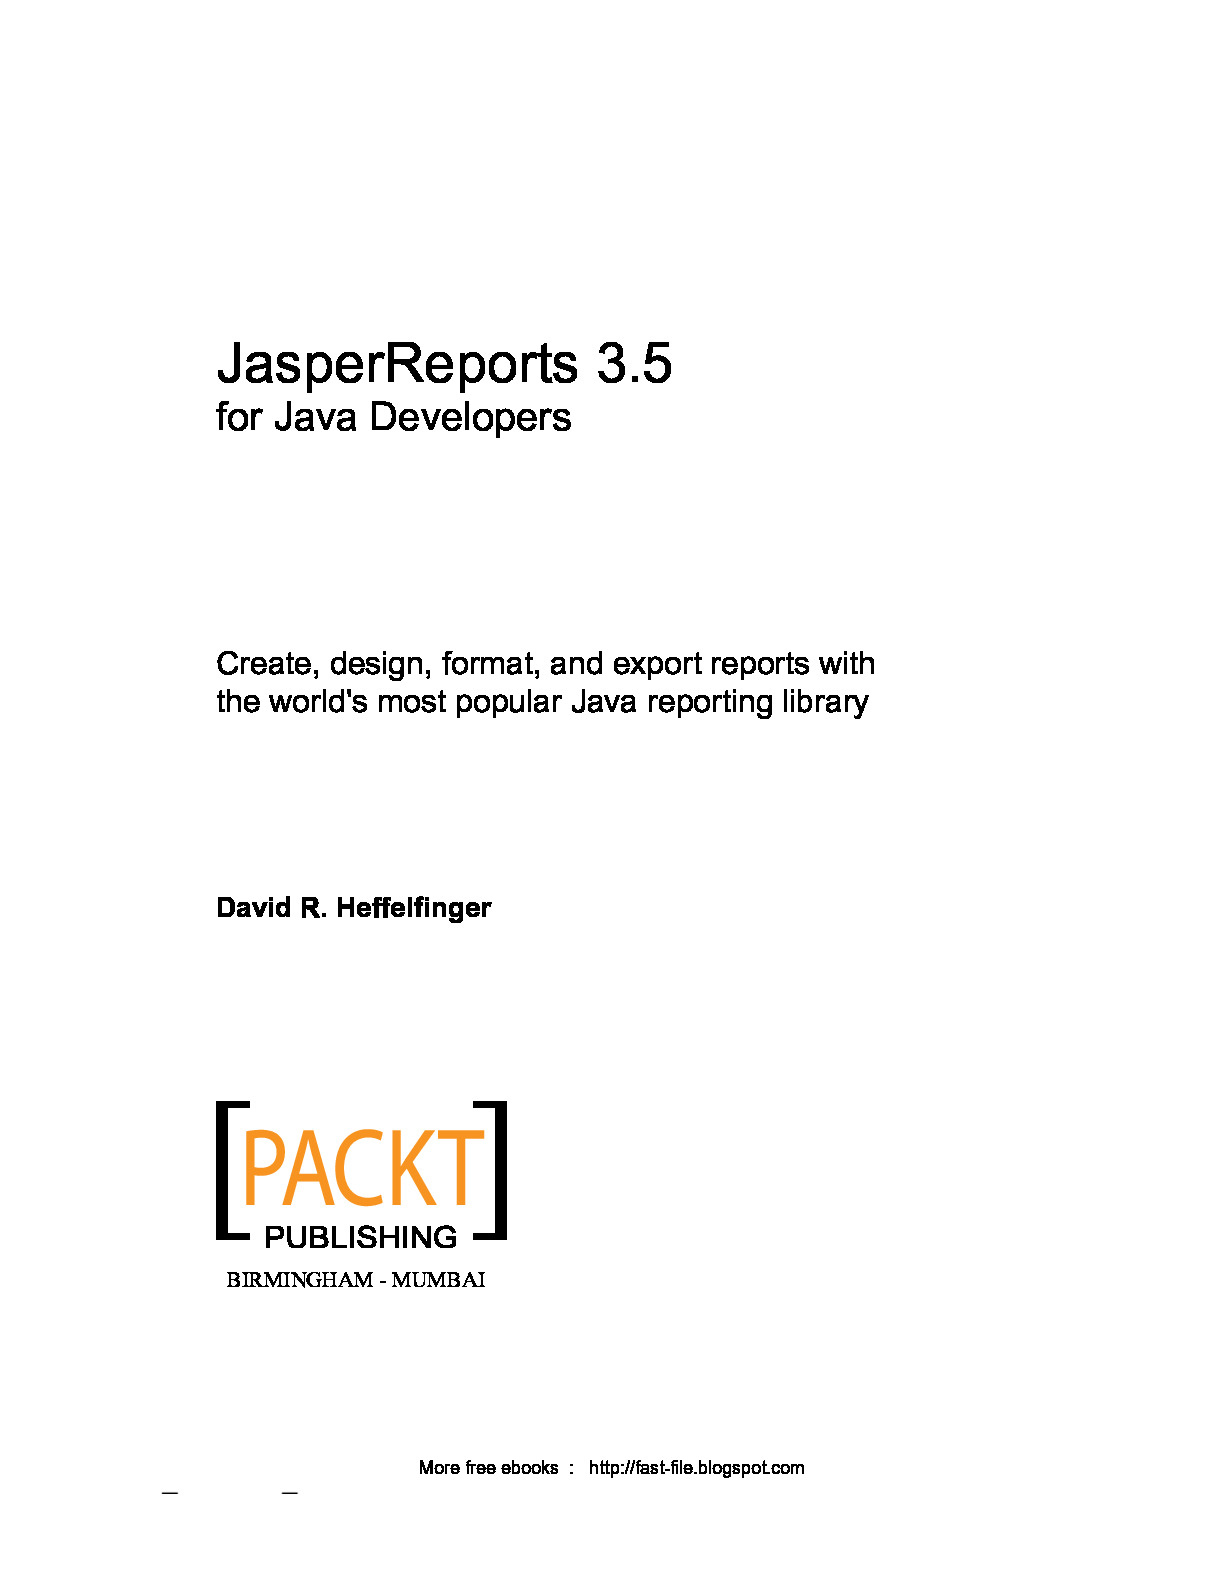 [JAVA][JasperReports 3.5 for Java Developers]